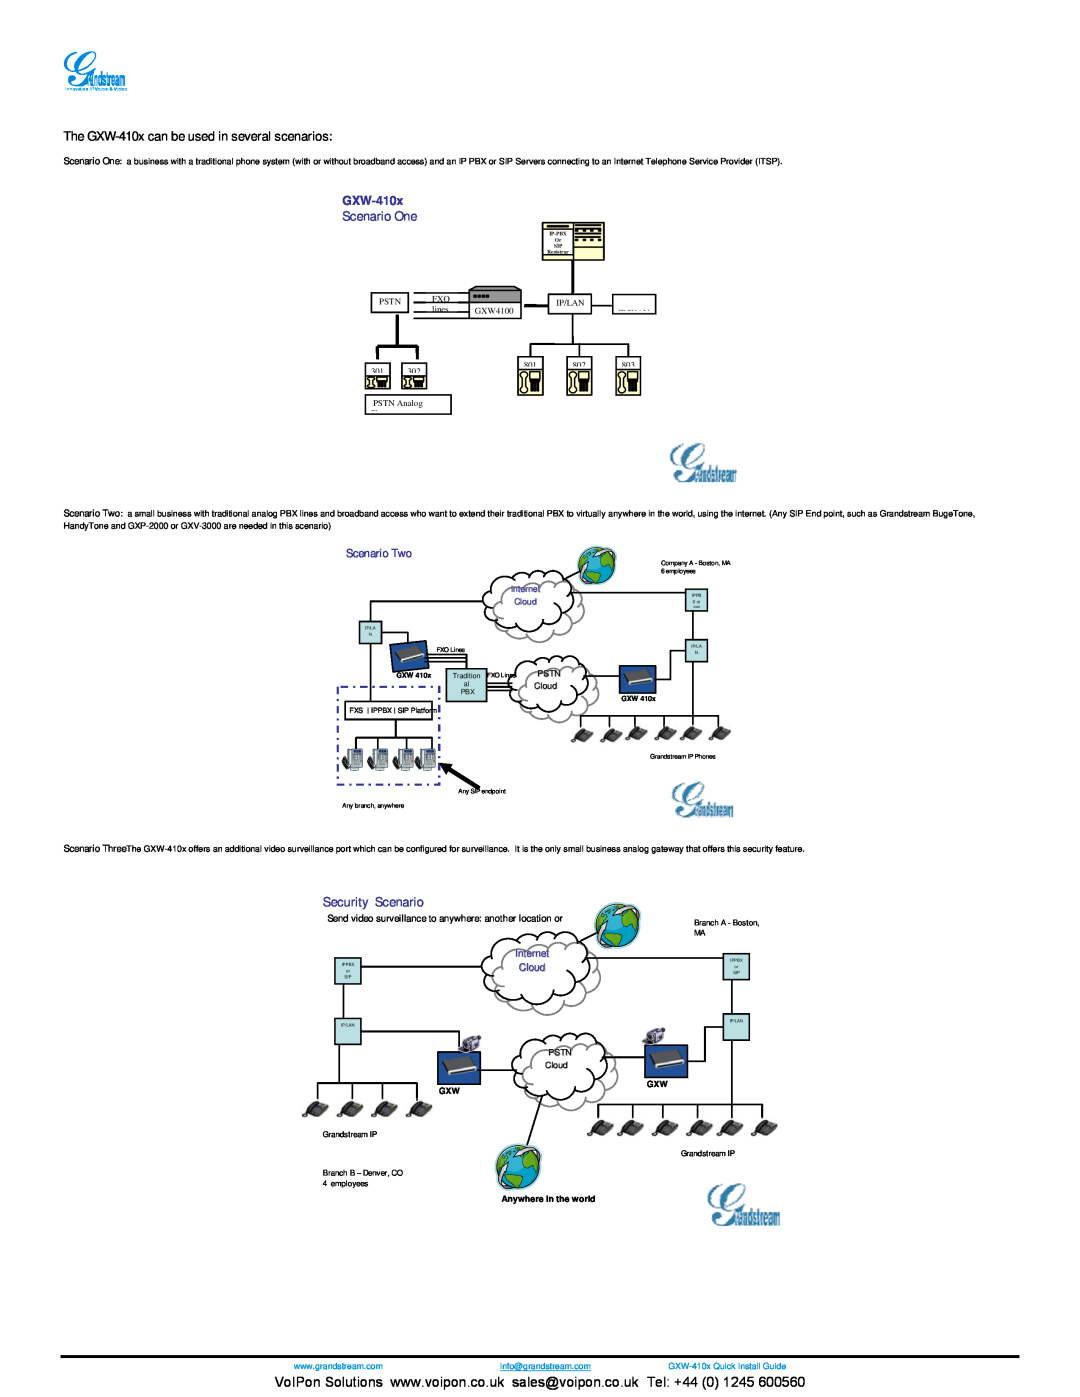 Grandstream Networks GXW4104, GXW4108 manual Scenario One, Security Scenario, GXW-410x, Scenario Two, Internet CloudX or 